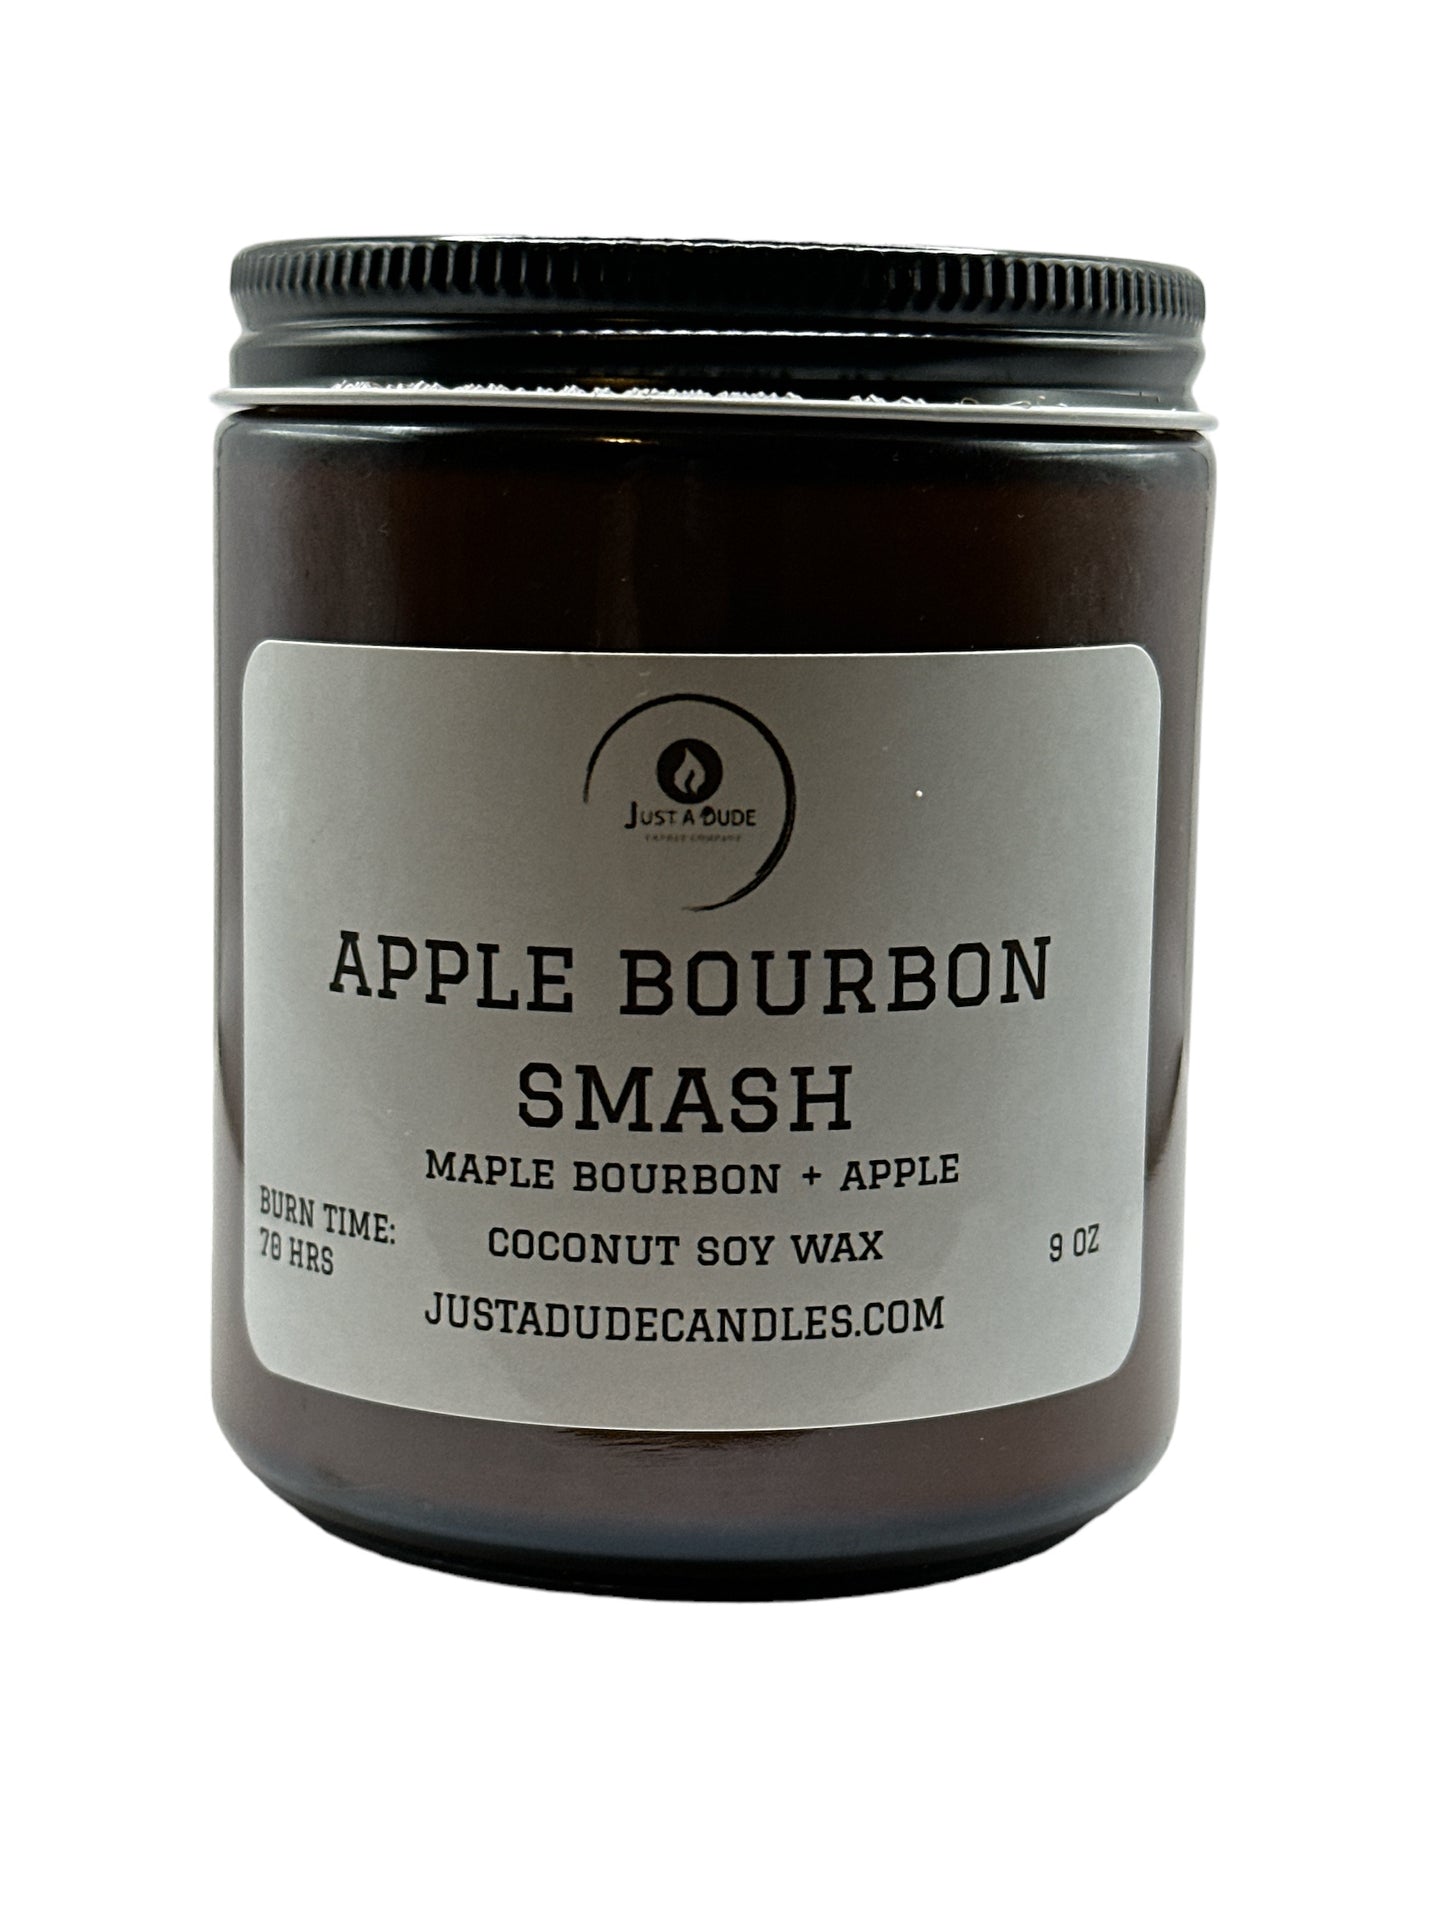 APPLE BOURBON SMASH (Apple & Maple Bourbon) AMBER JAR COLLECTION